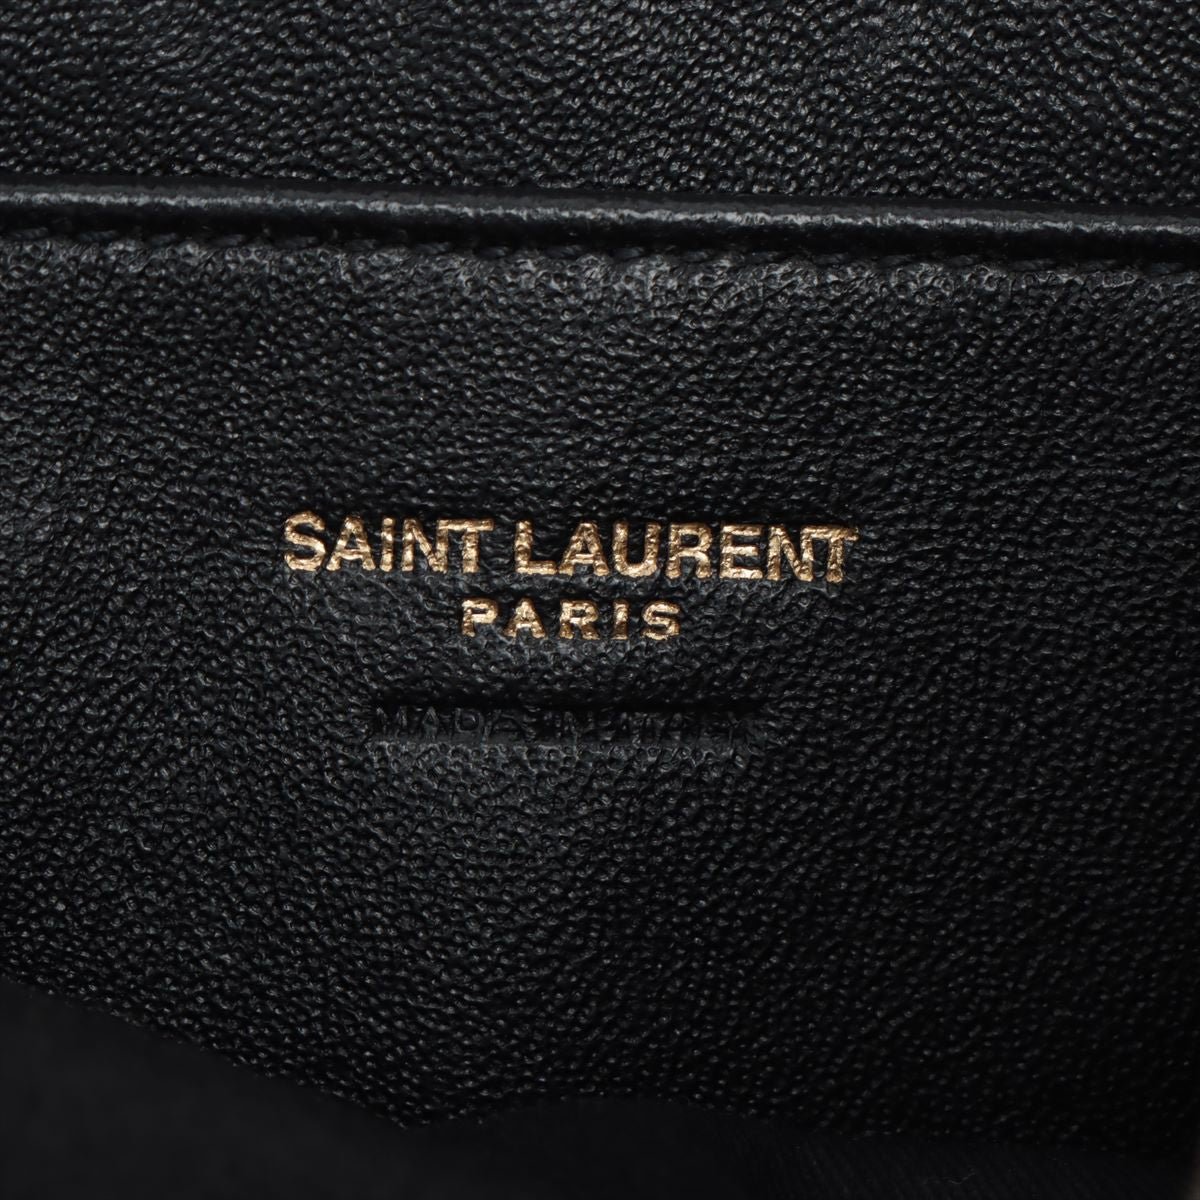 Second hand Yves Saint Laurent Paris Baby Cabas Leather 2-way Grey - Tabita Bags